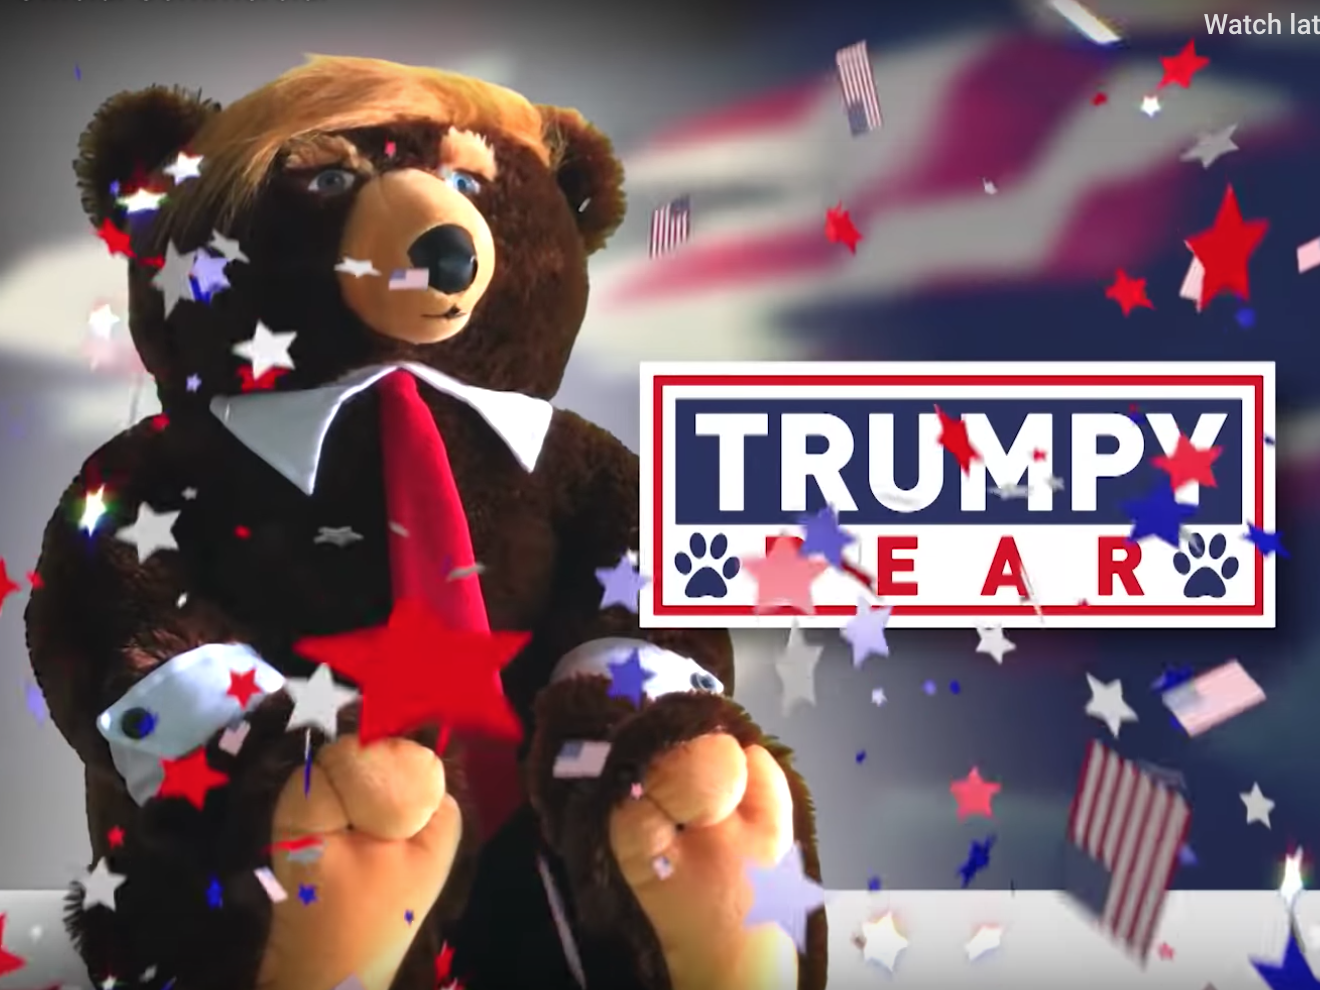 Donald Trump Bear Plush Toys Limited Edition USA Campaign Teddy Trumpy New Cool 